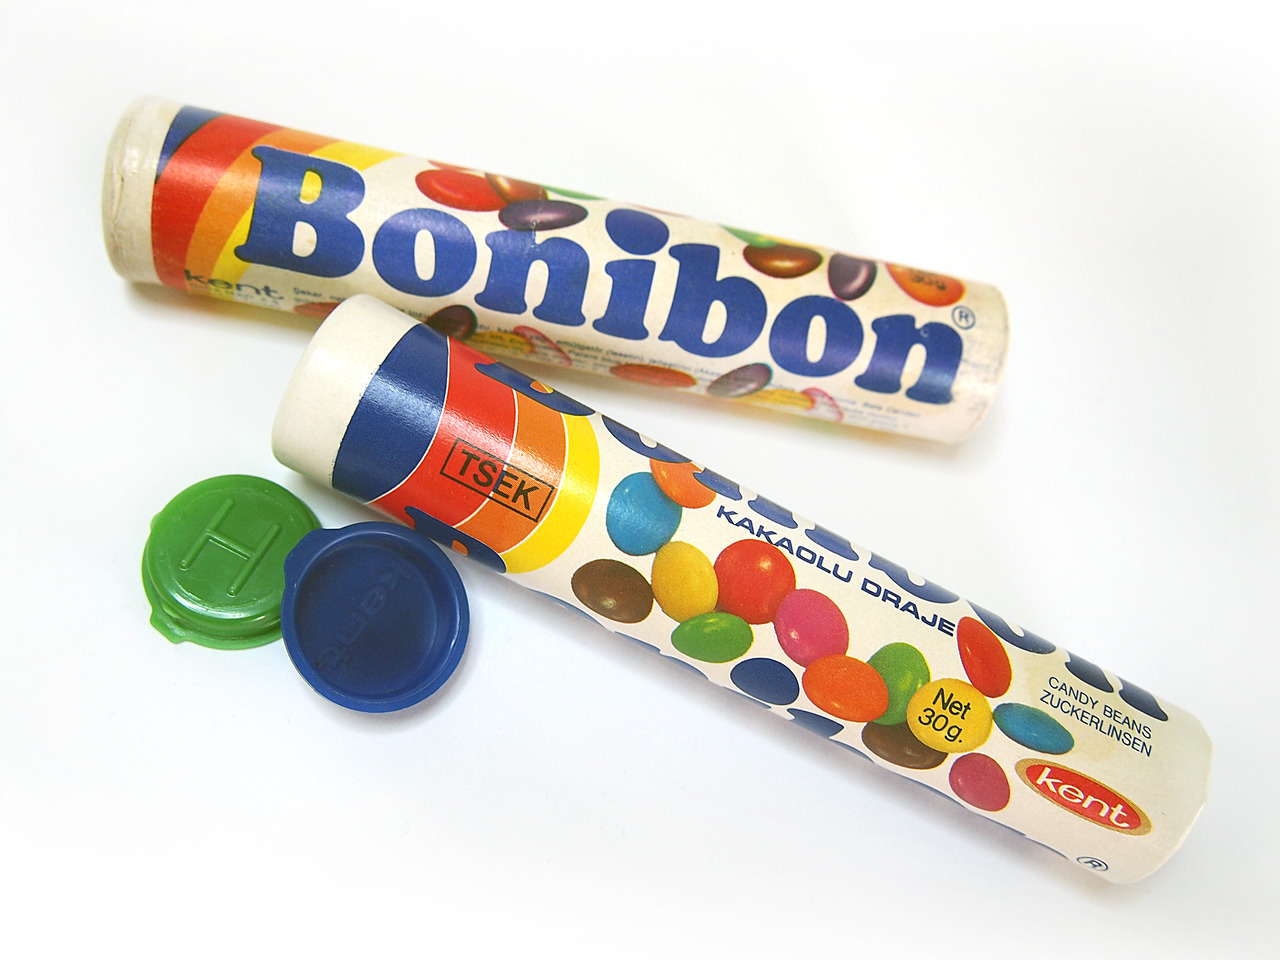 2000 год товары. Драже Bonibon 90е. Бондибон конфеты 90е. Конфеты 90х. Конфеты из 90-х.